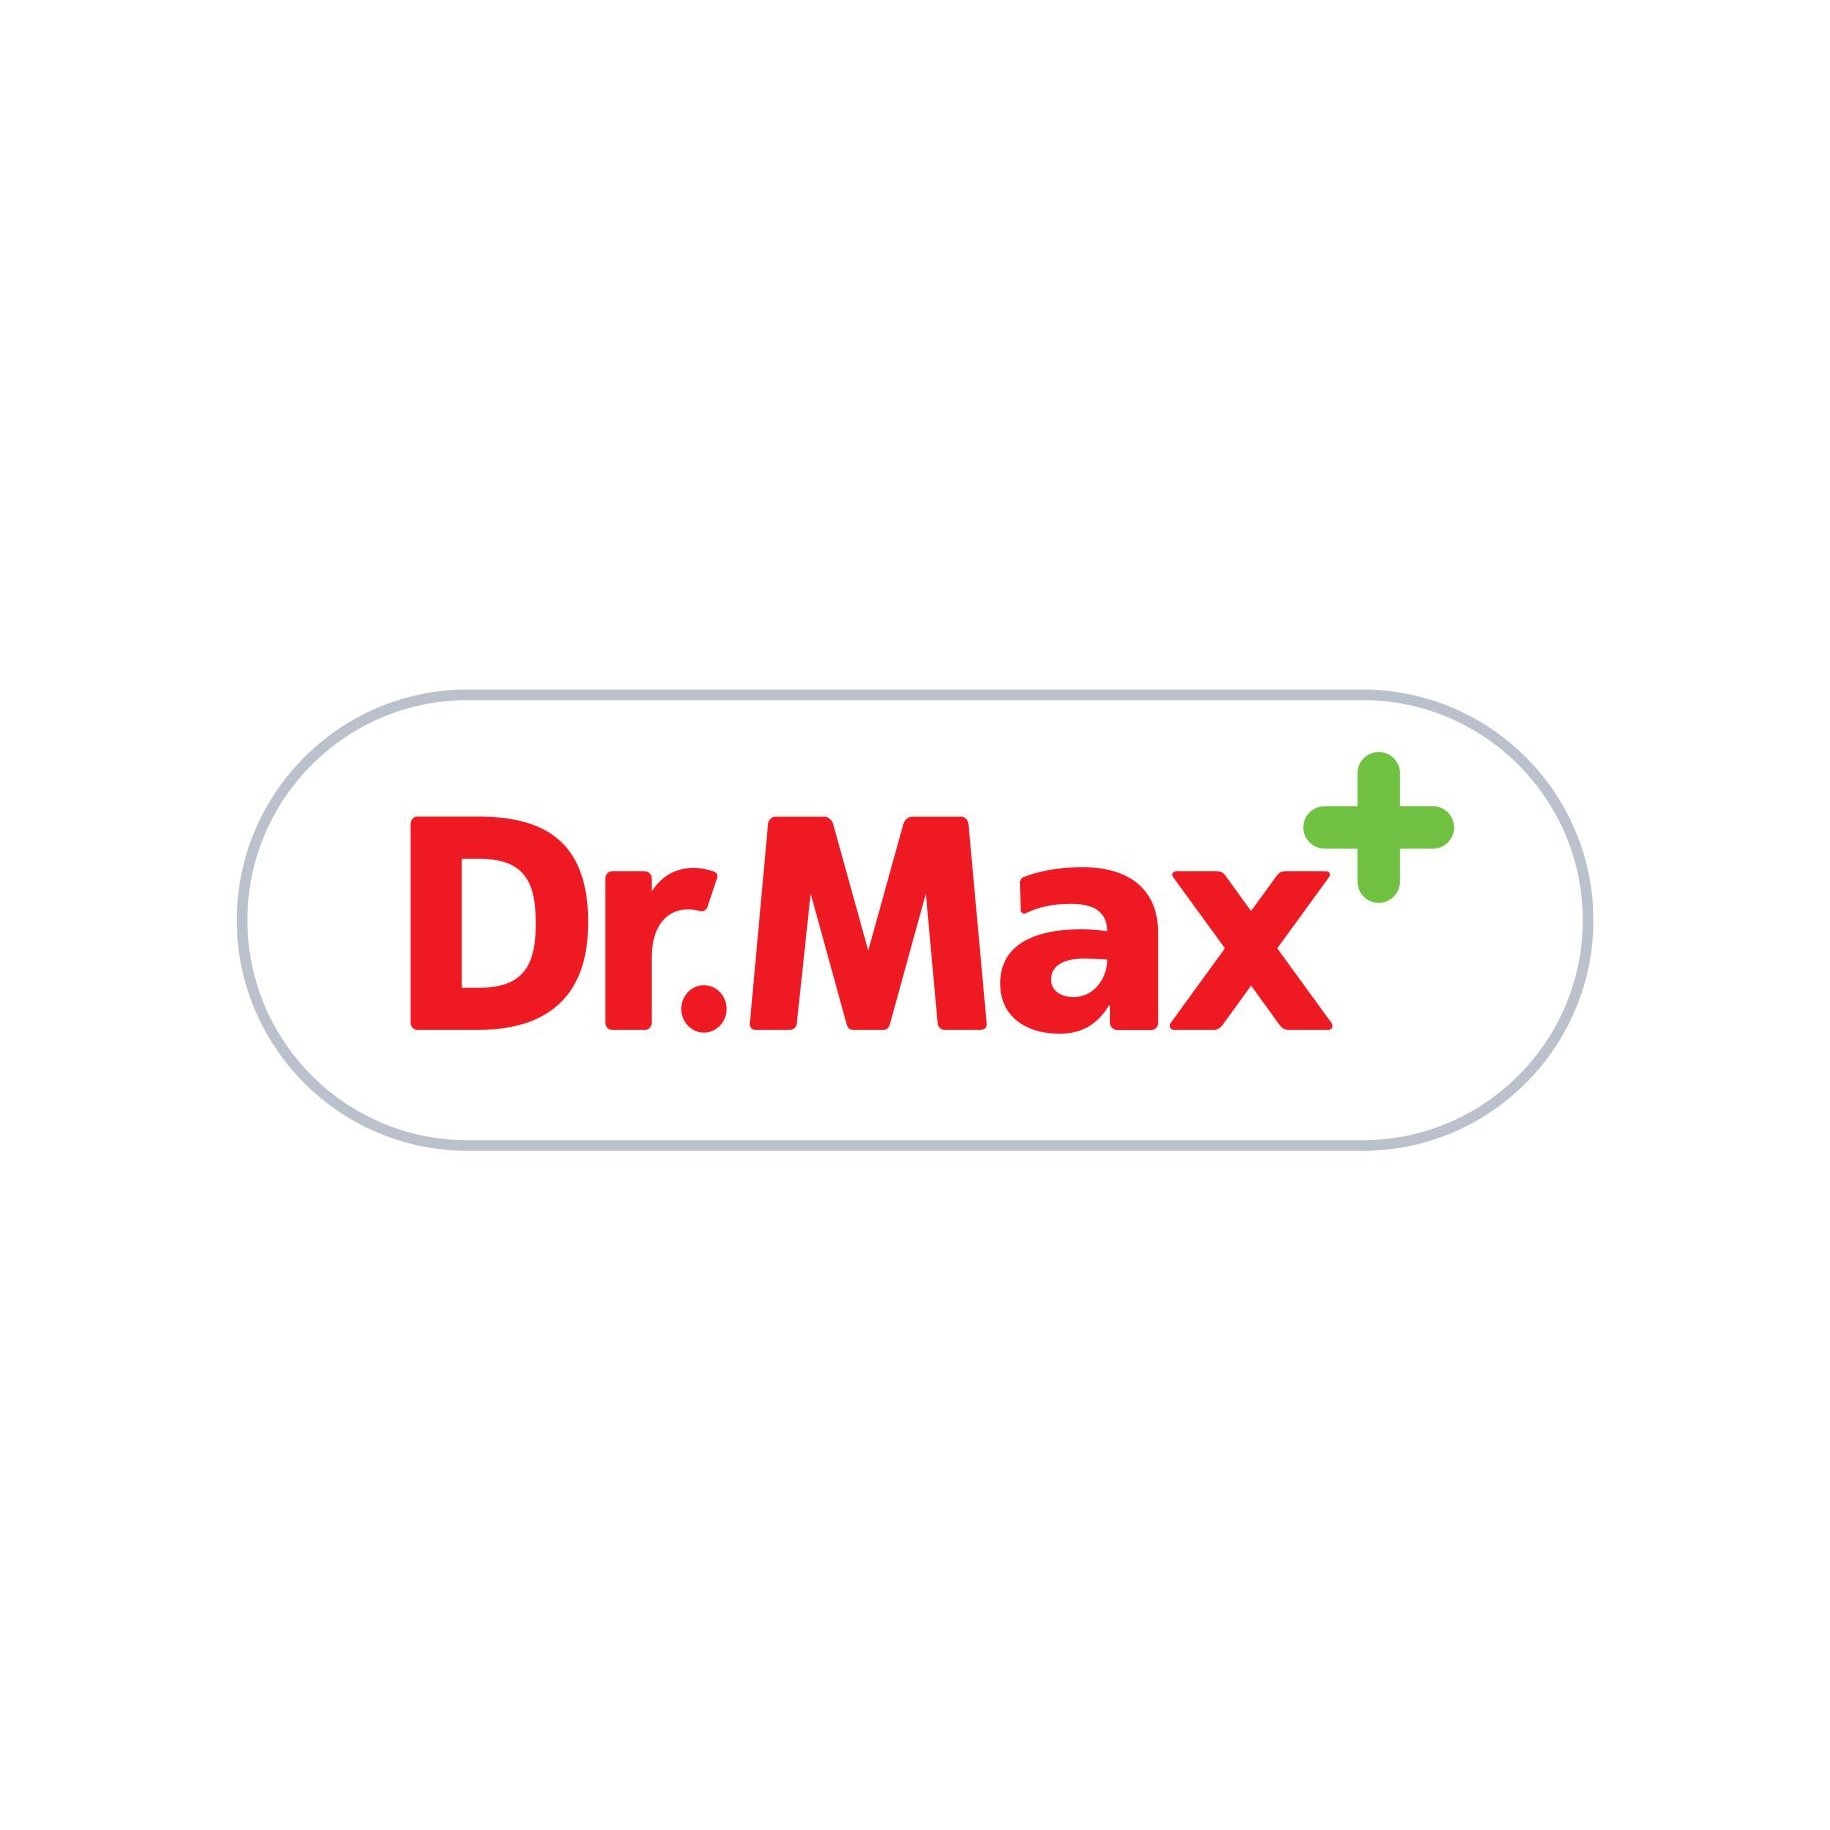 Lekáreň Dr.Max Lekáreň Dr.Max Trstice 0901 961 256